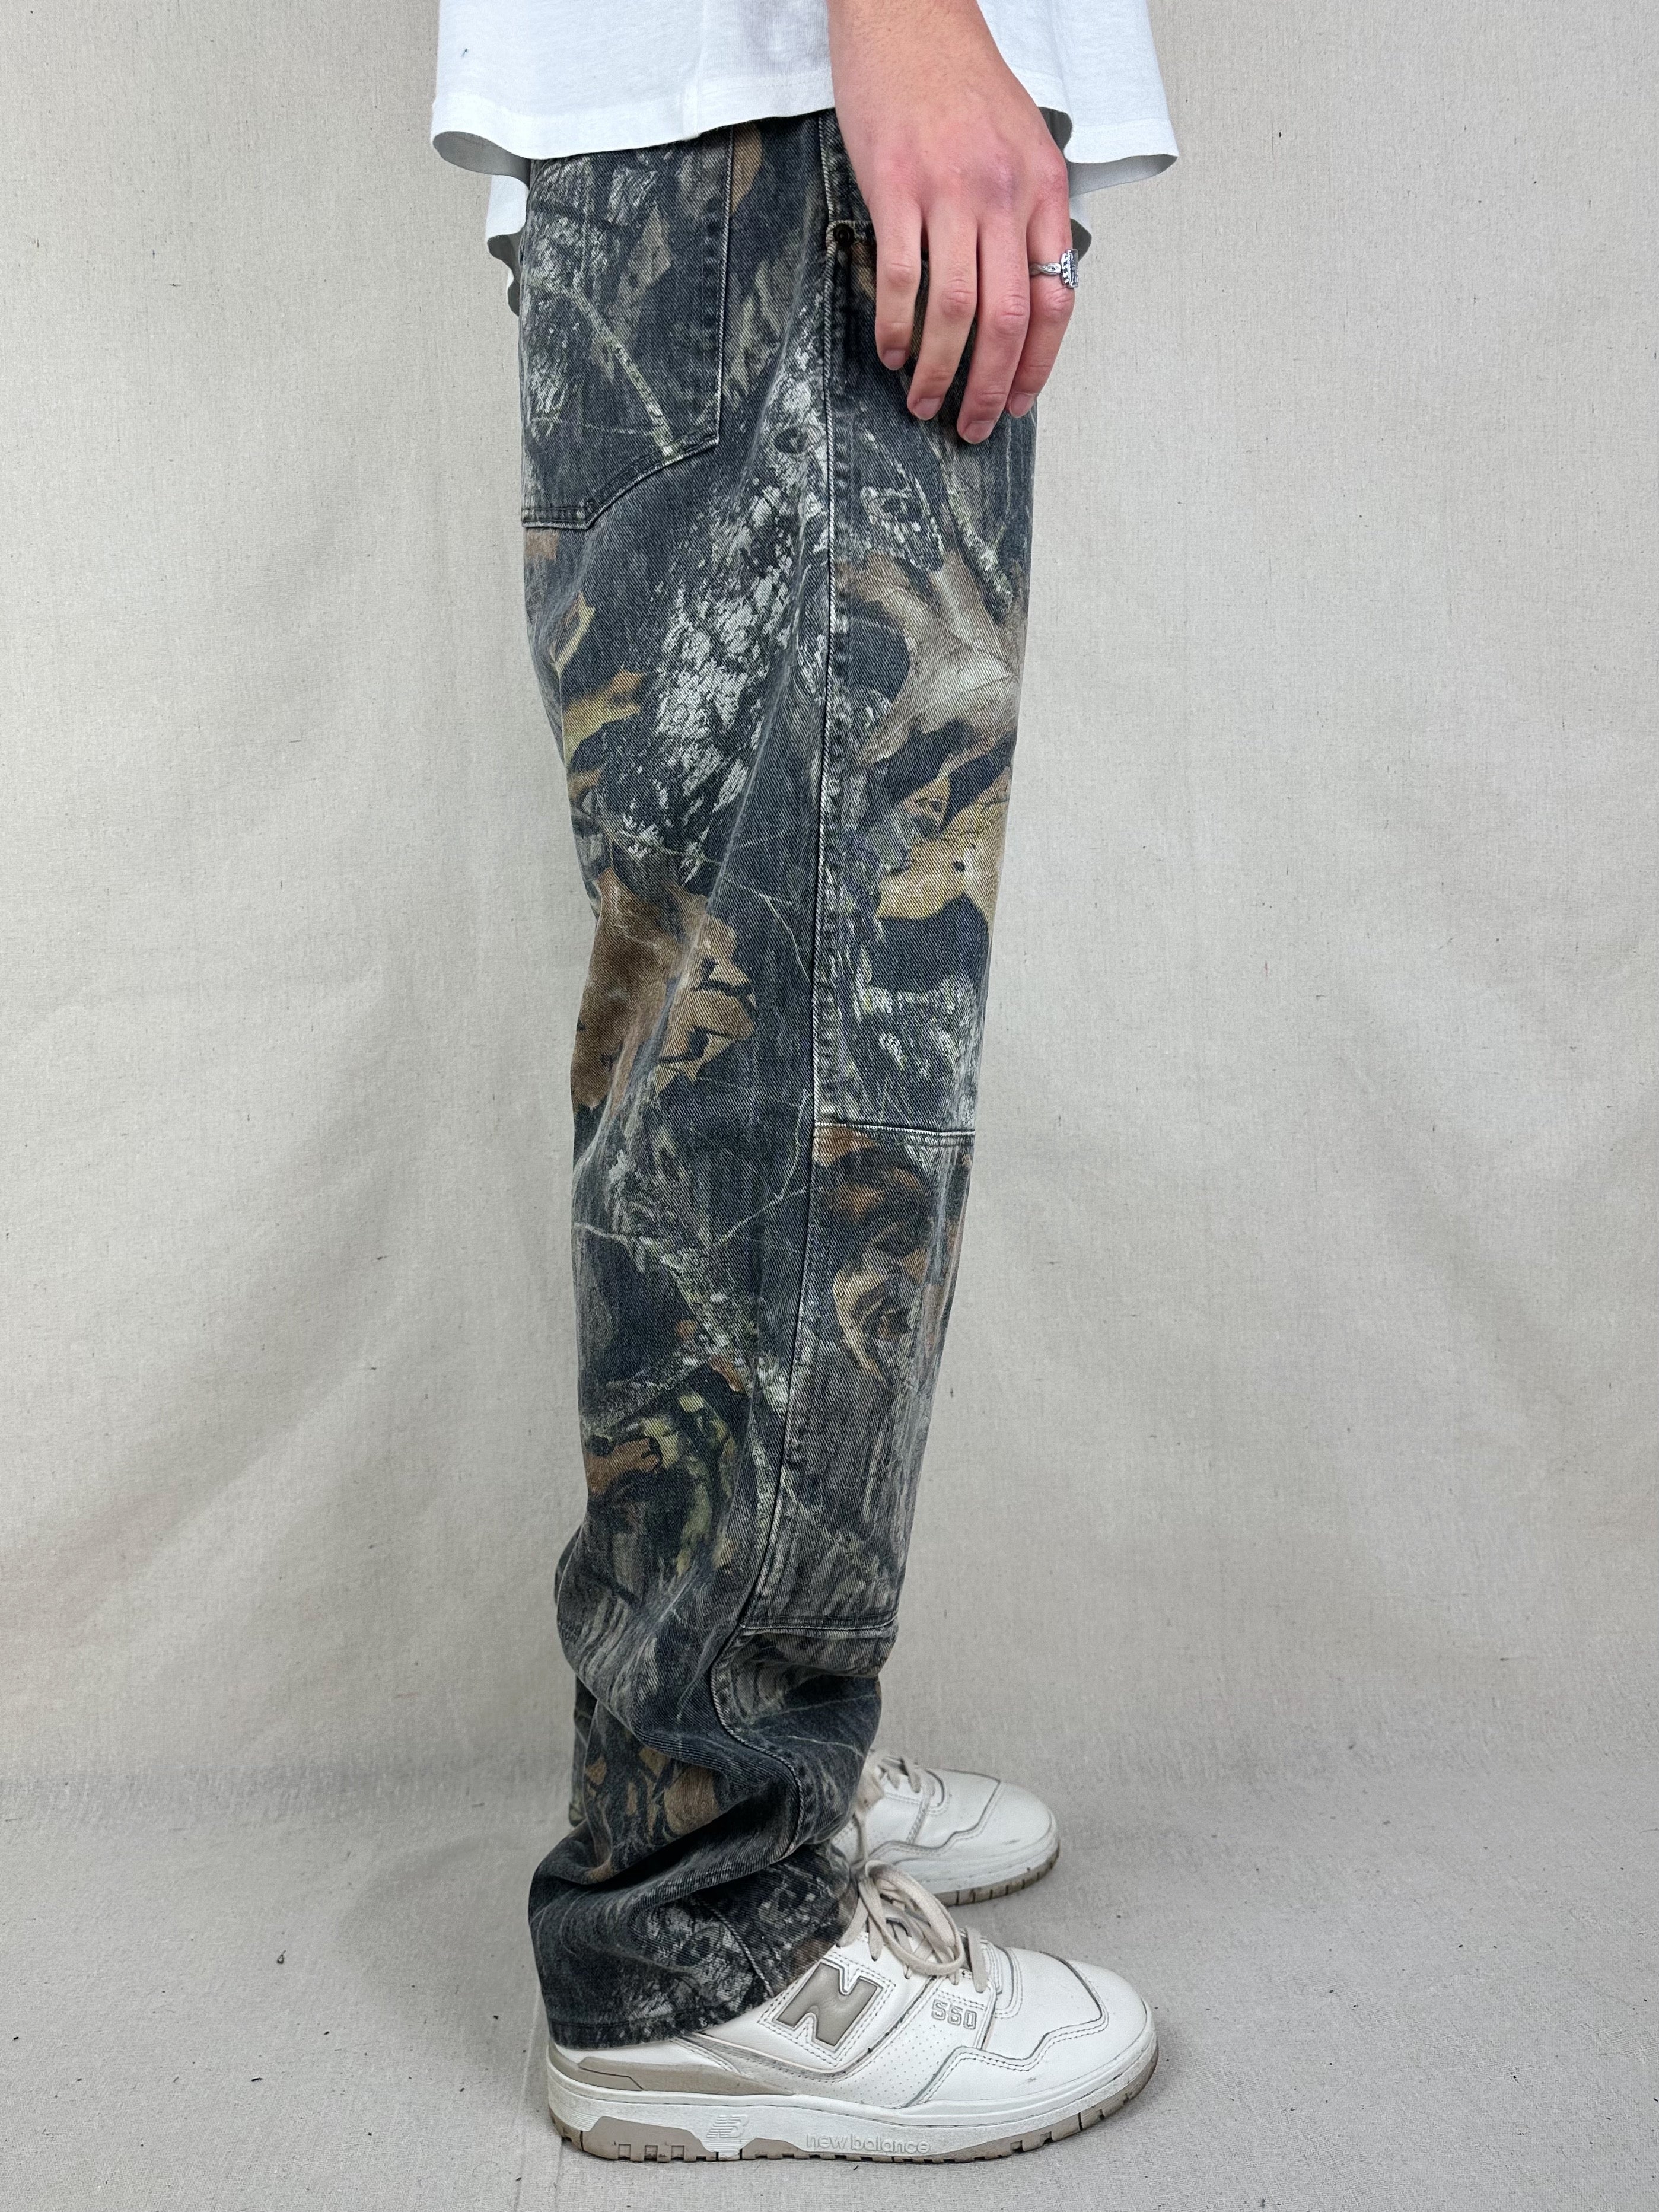 Wrangler Cargo Pants Men 40x30 Actual 40x28 Camouflage Outdoor Gear Hunting  | eBay